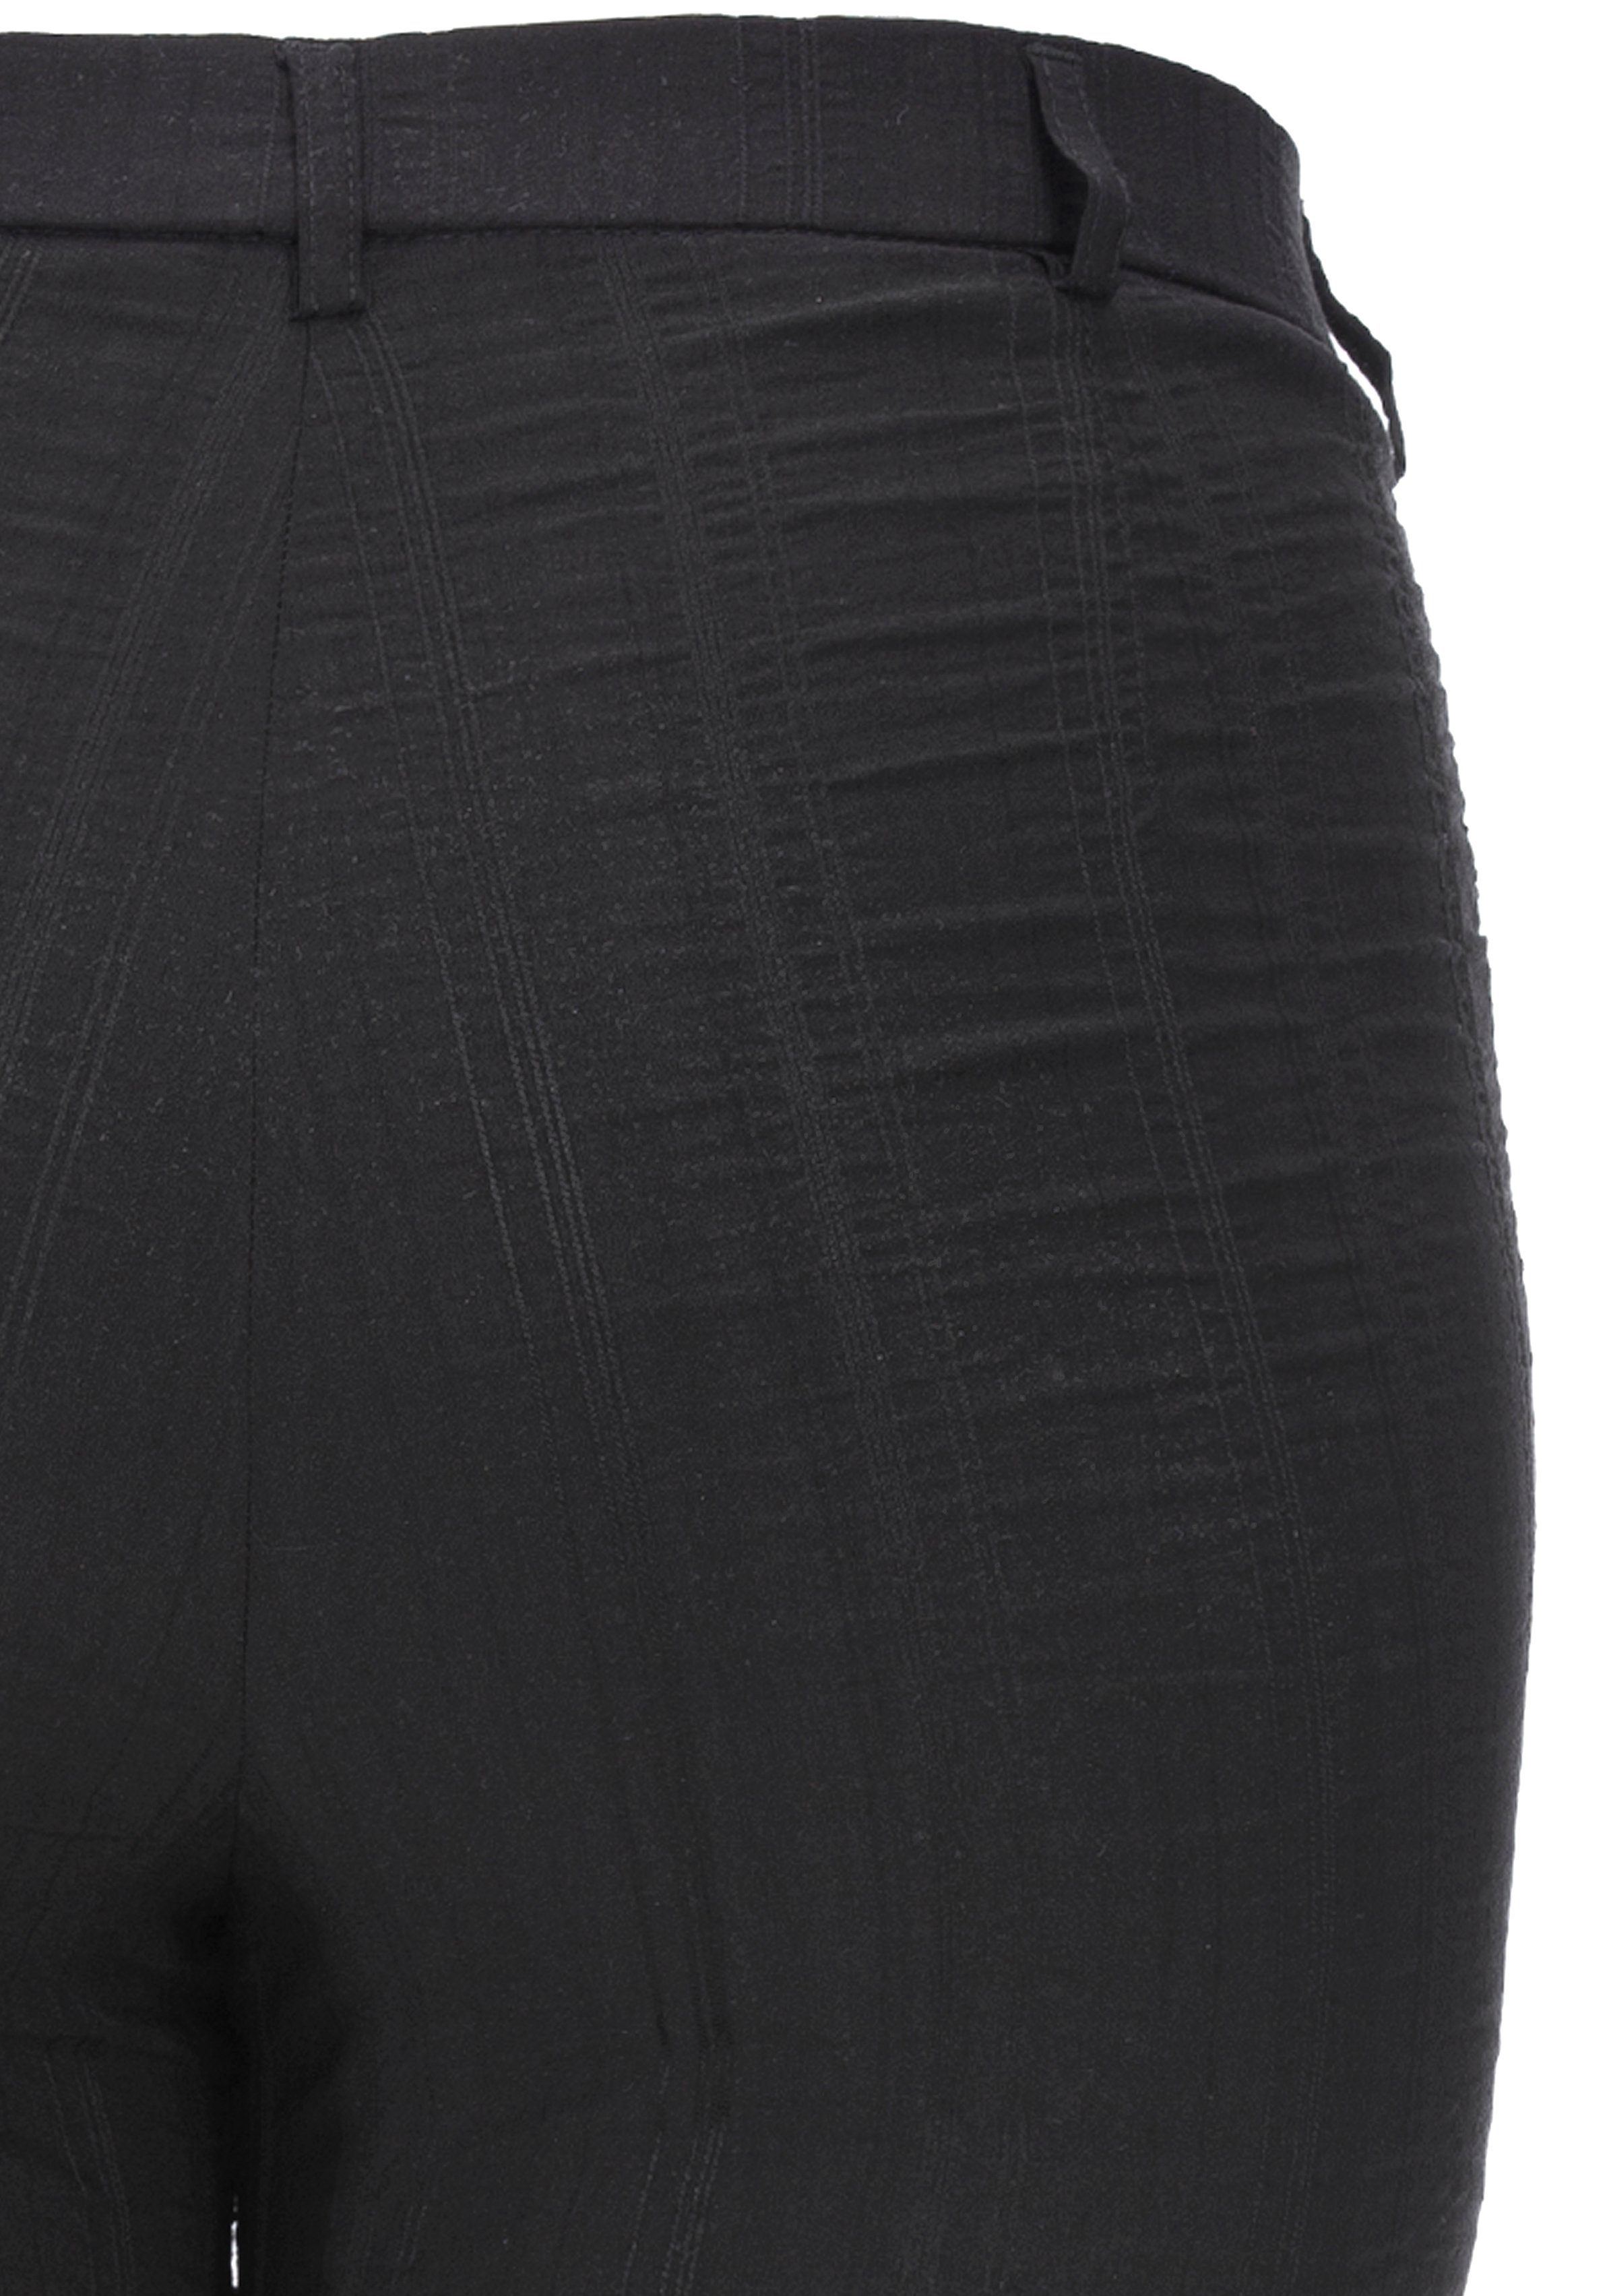 KjBRAND Stoffhose gestreift Passform optimale Quer-Stretch schwarz in Bea